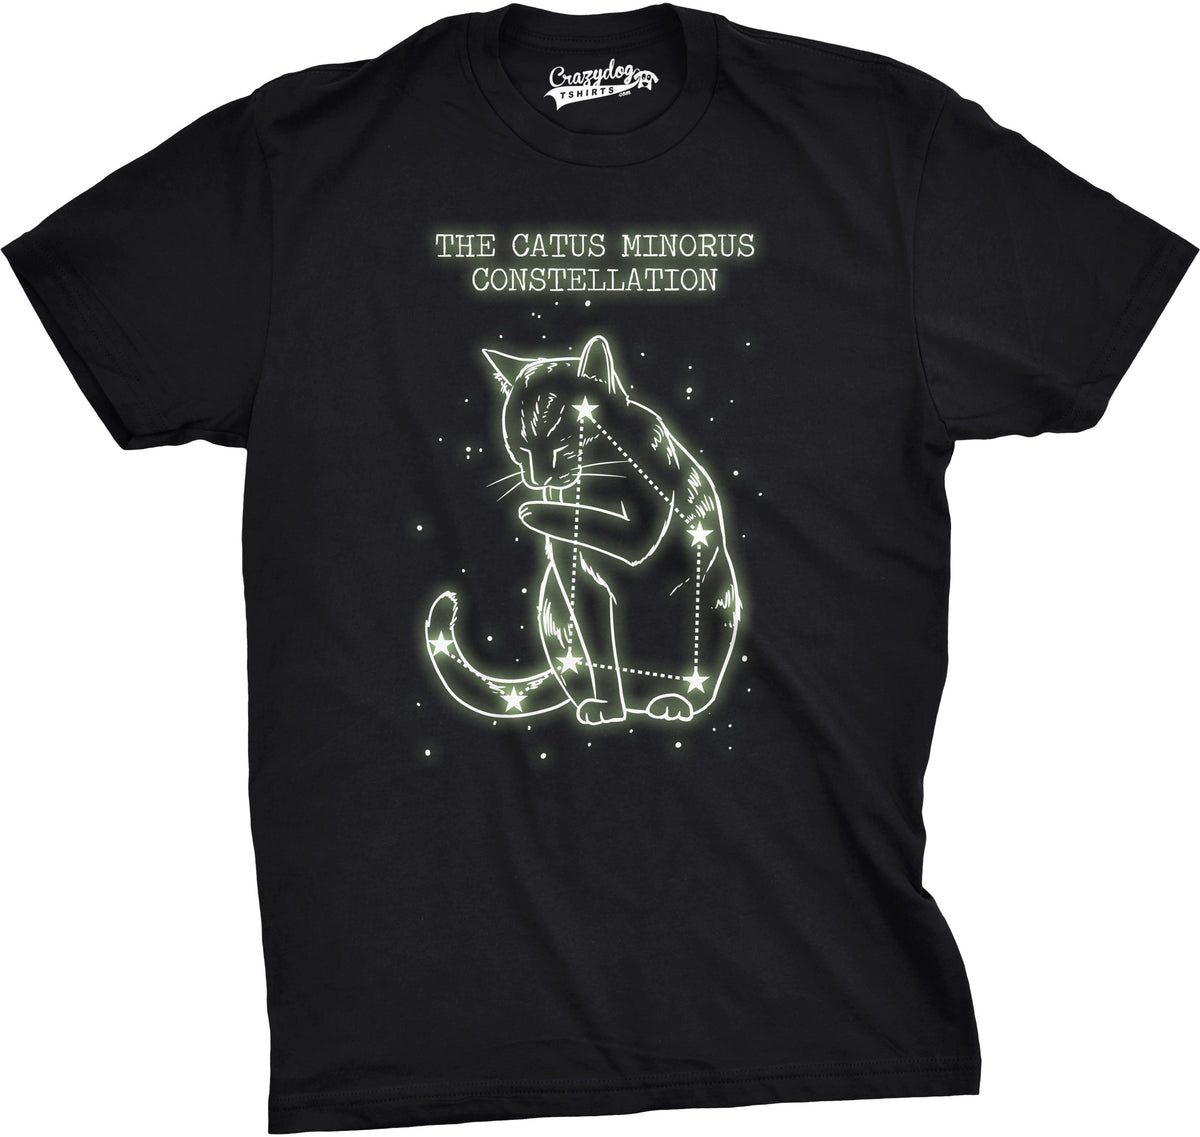 Funny Black Mens T Shirt Nerdy Science Cat Tee